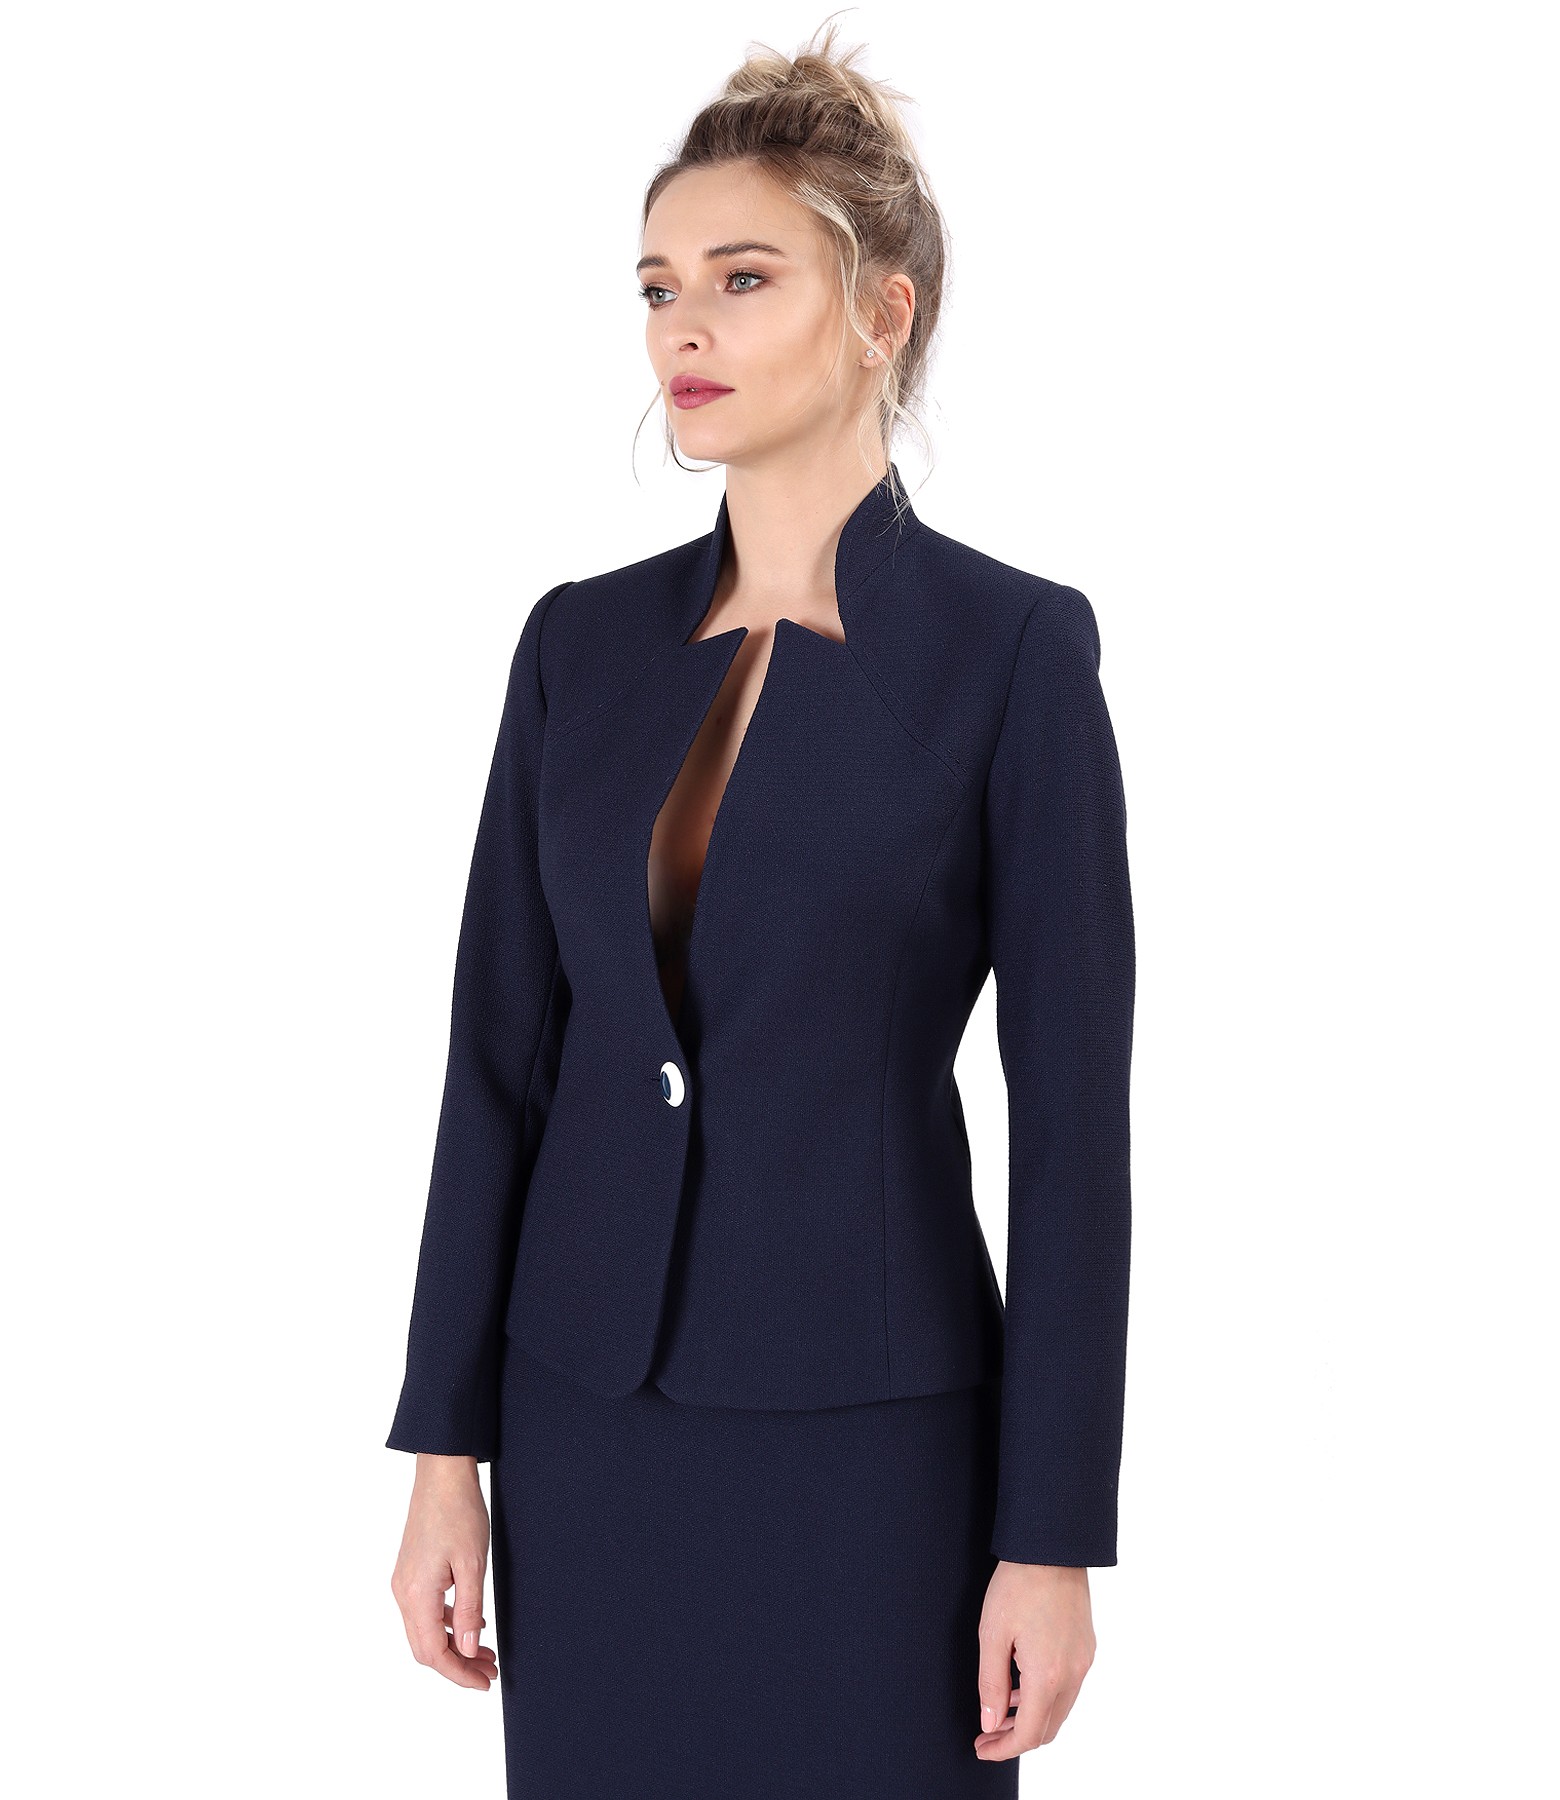 Office jacket made of elastic fabric navy blue - YOKKO